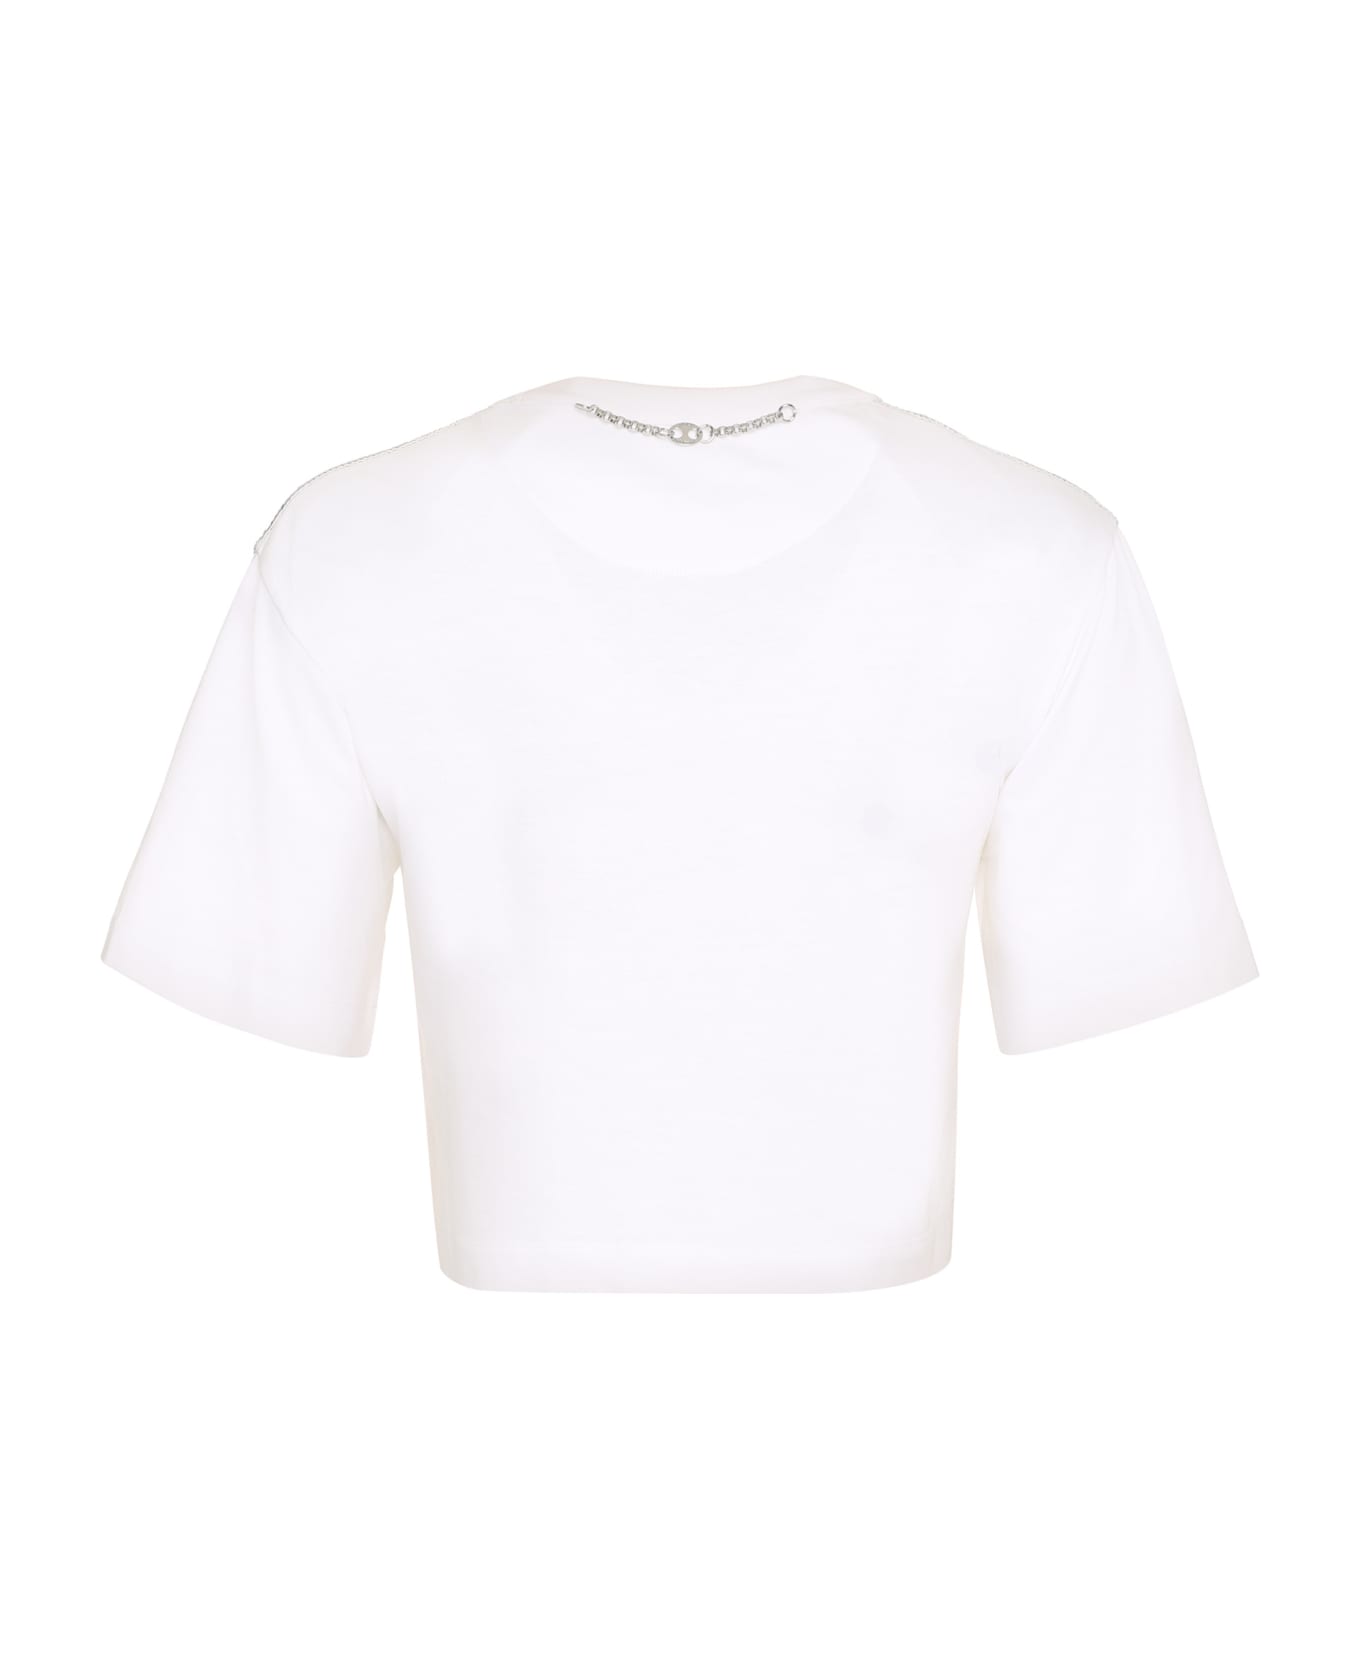 Paco Rabanne Crew-neck T-shirt - Silver White Tシャツ